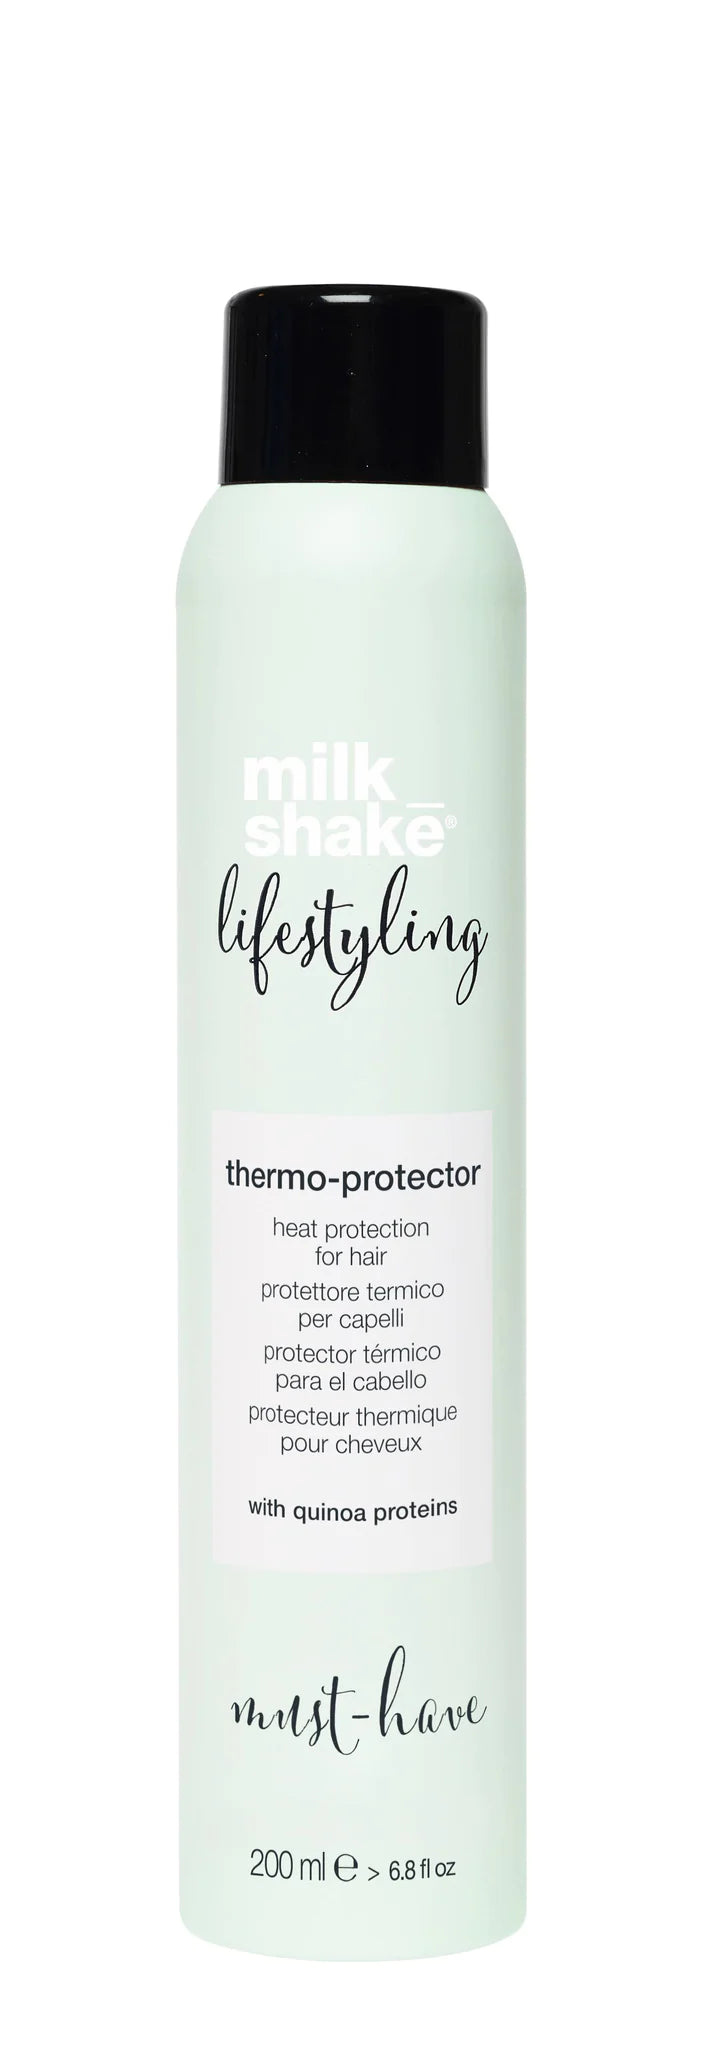 Milkshake Lifestyling Thermo-protector